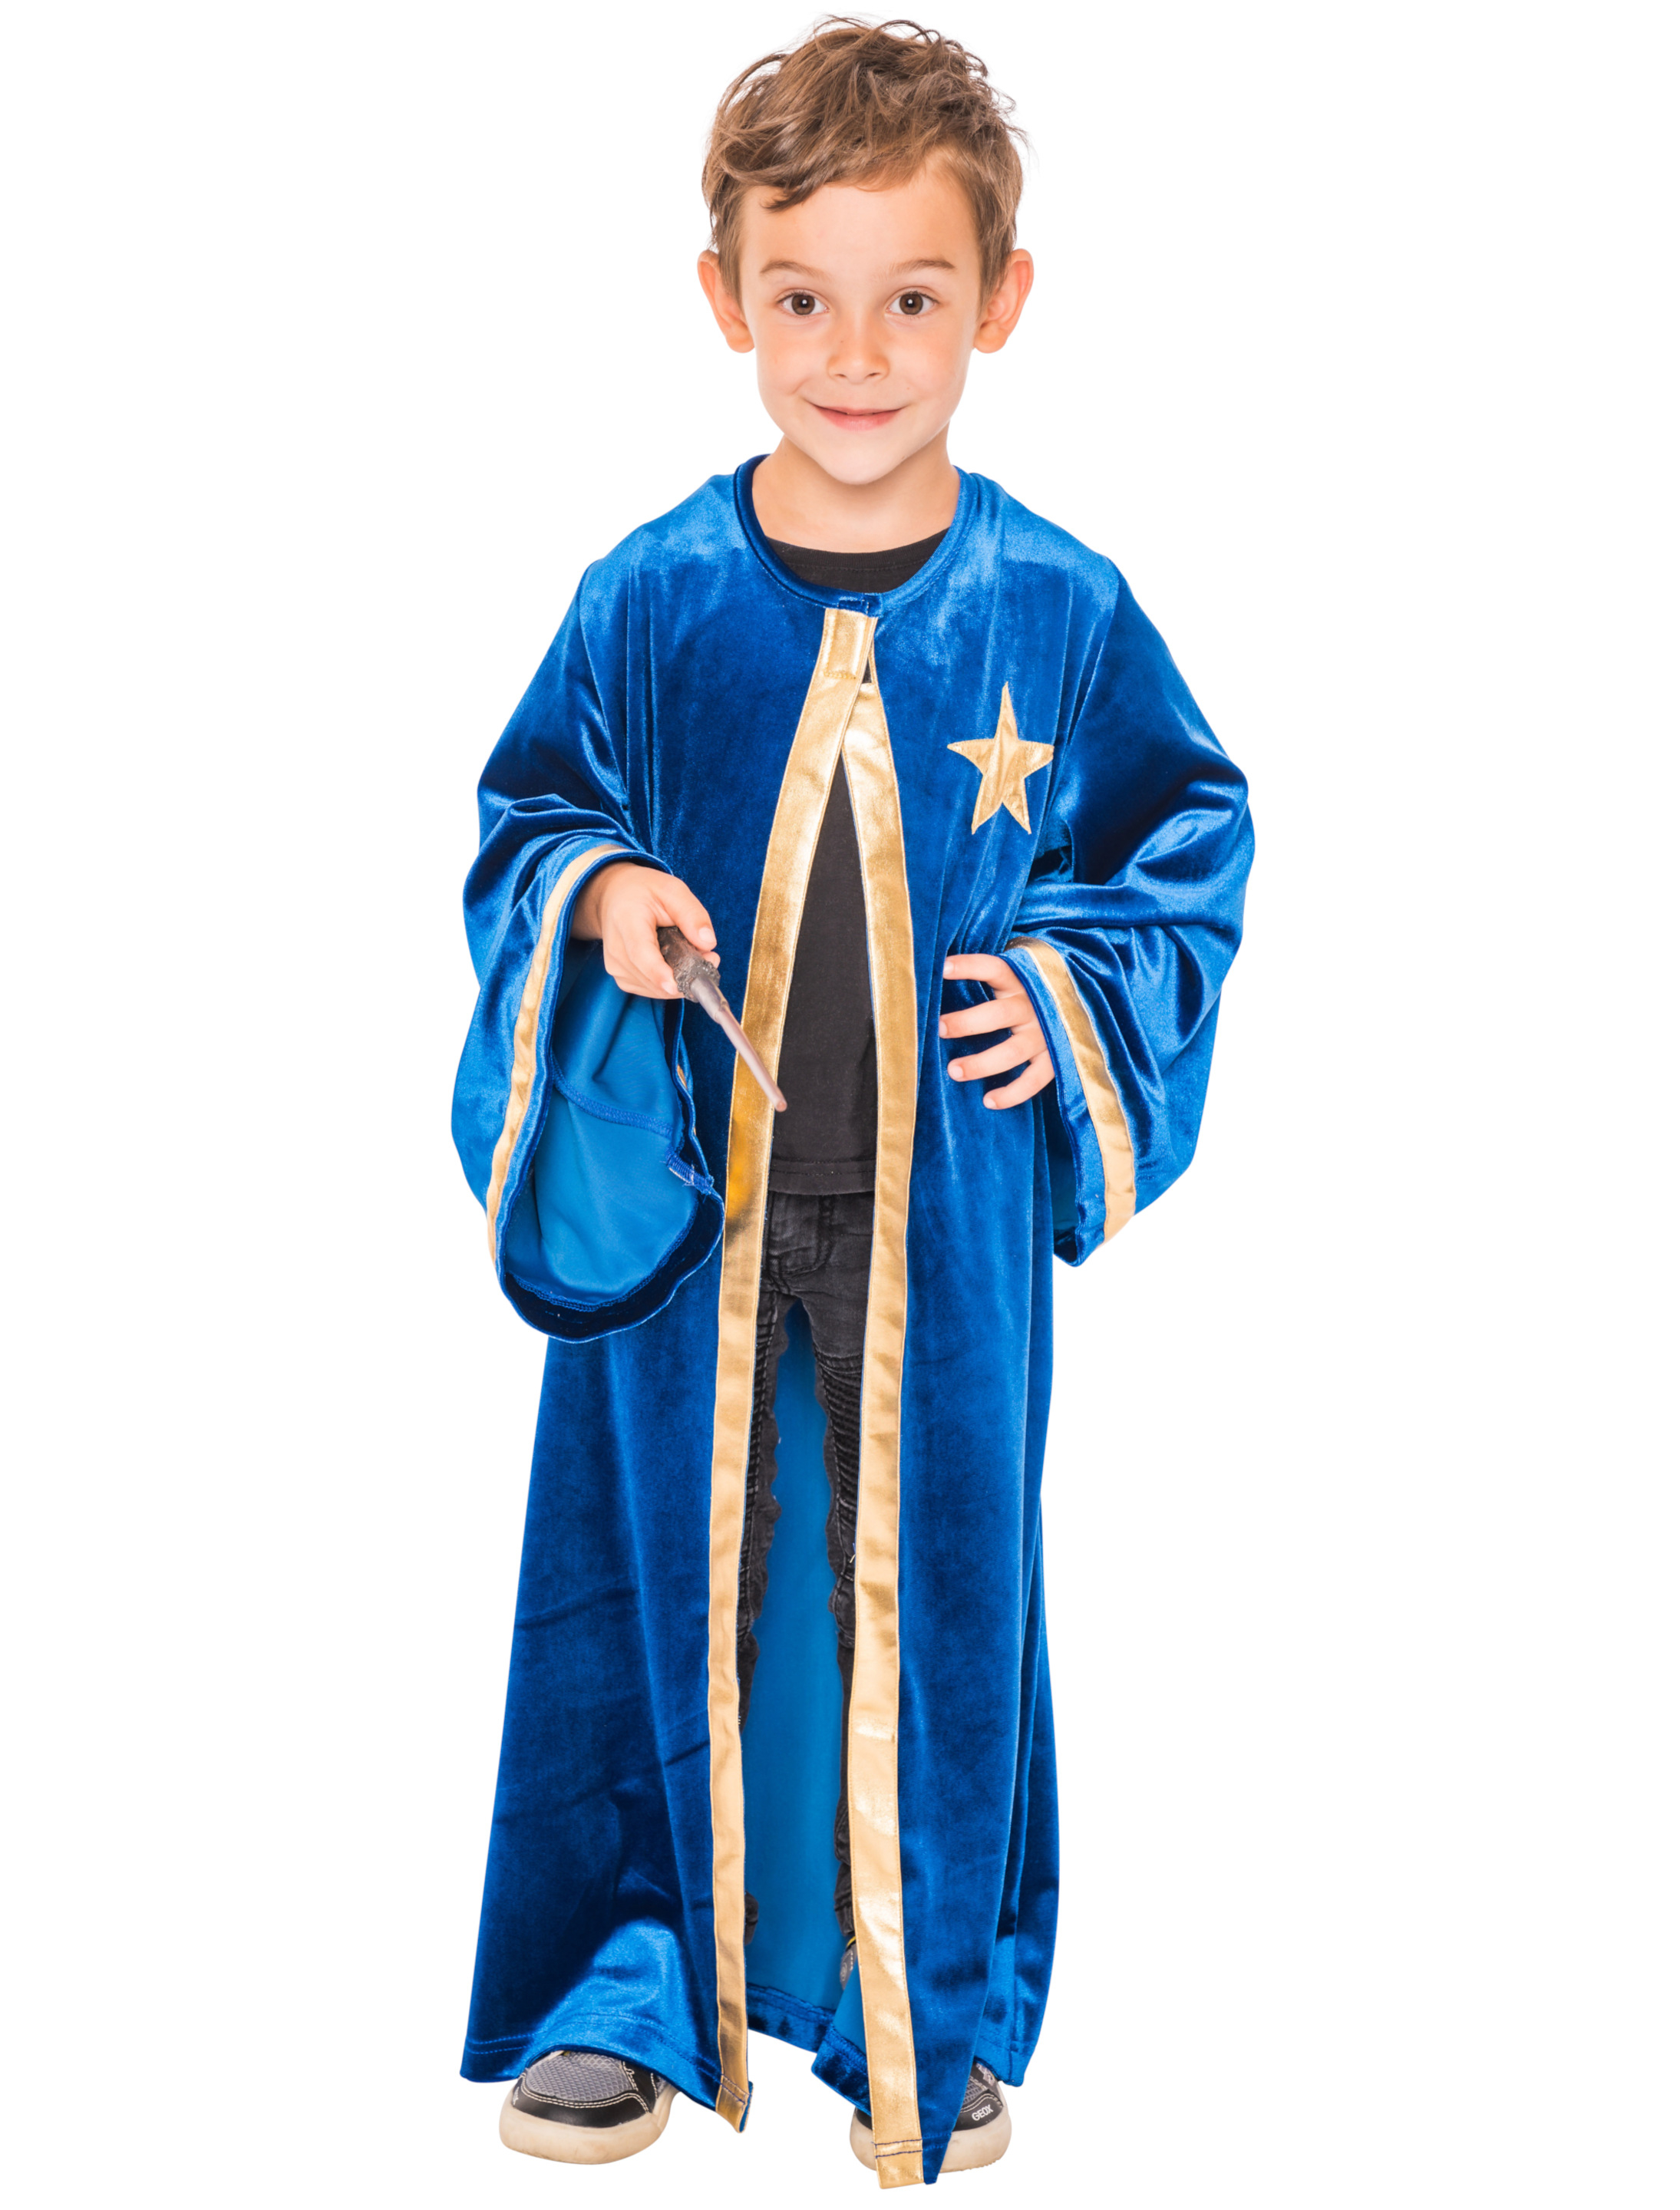 Mantel Zauberer Kinder blau 164